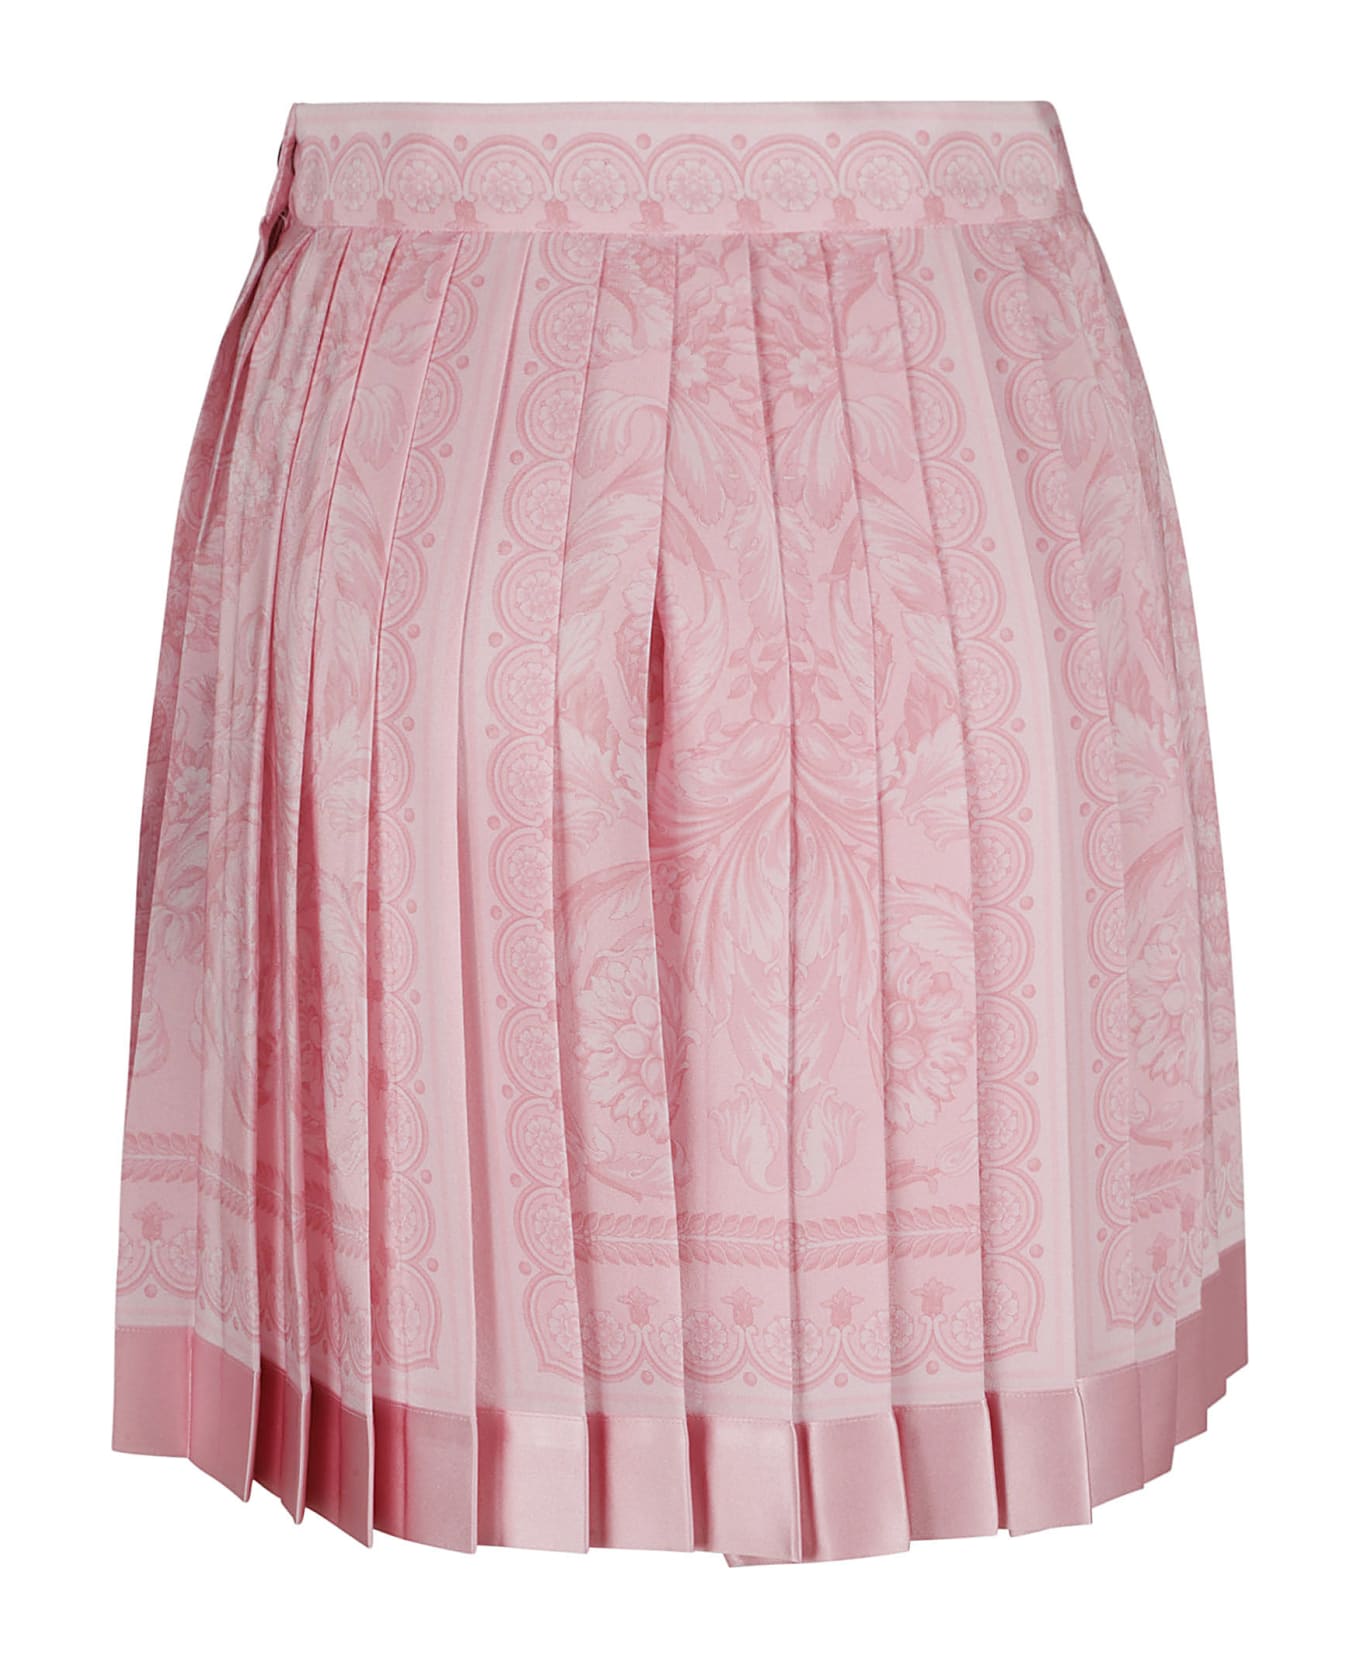 Versace Baroque Print Crepe Skirt - Pale Pink スカート